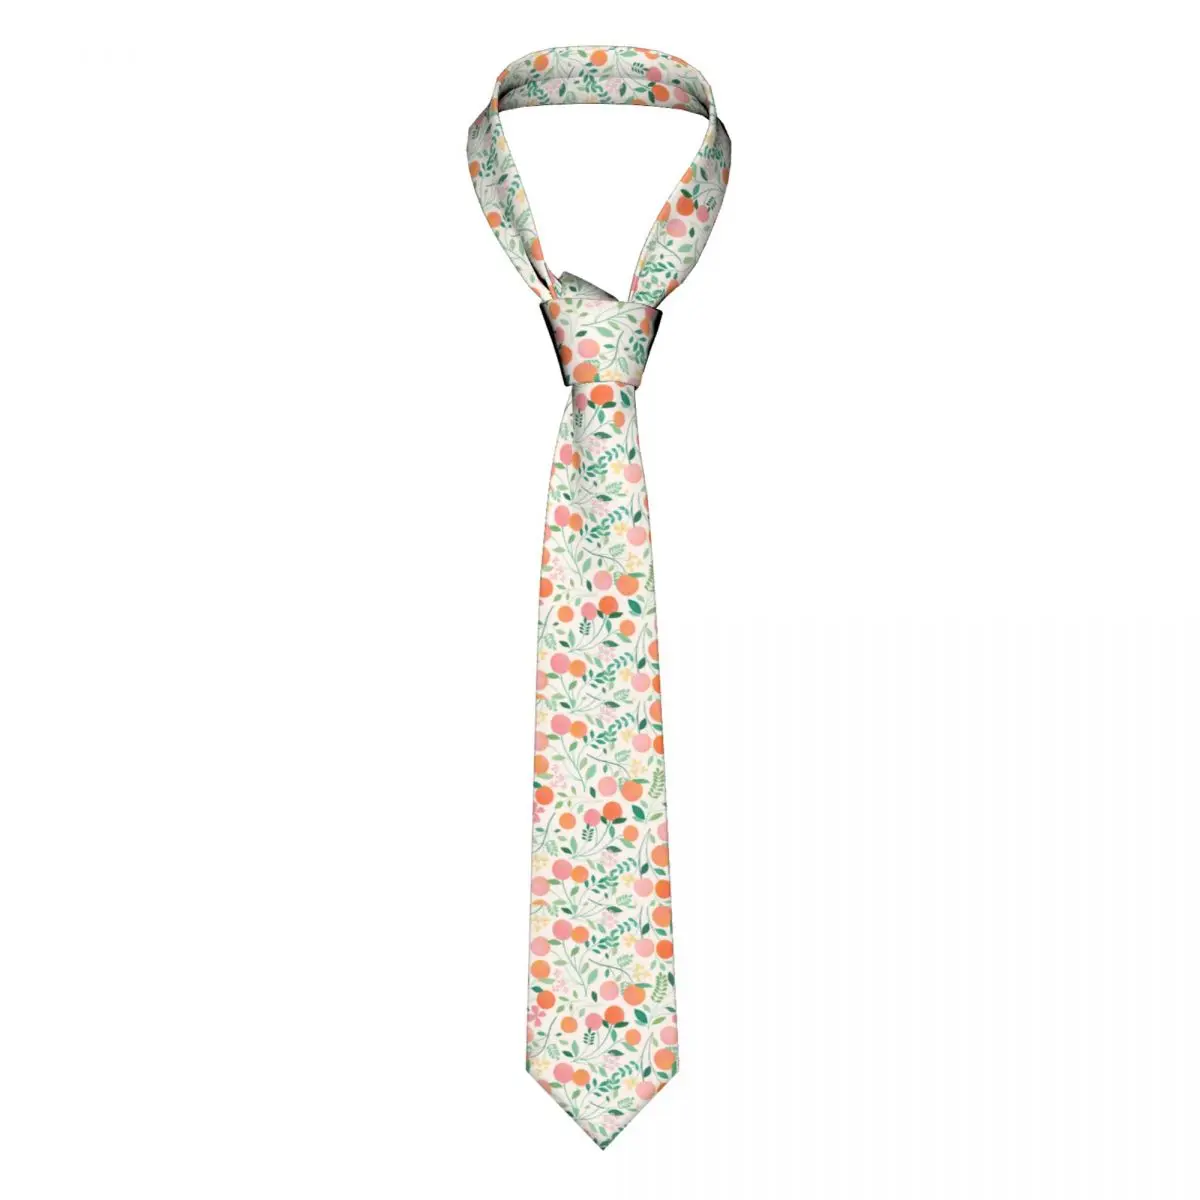 

Flower Green Leaves Peach Men Neckties Skinny Polyester 8 cm Classic Cute Fruit Neck Tie for Men Shirt Accessories Cravat Party